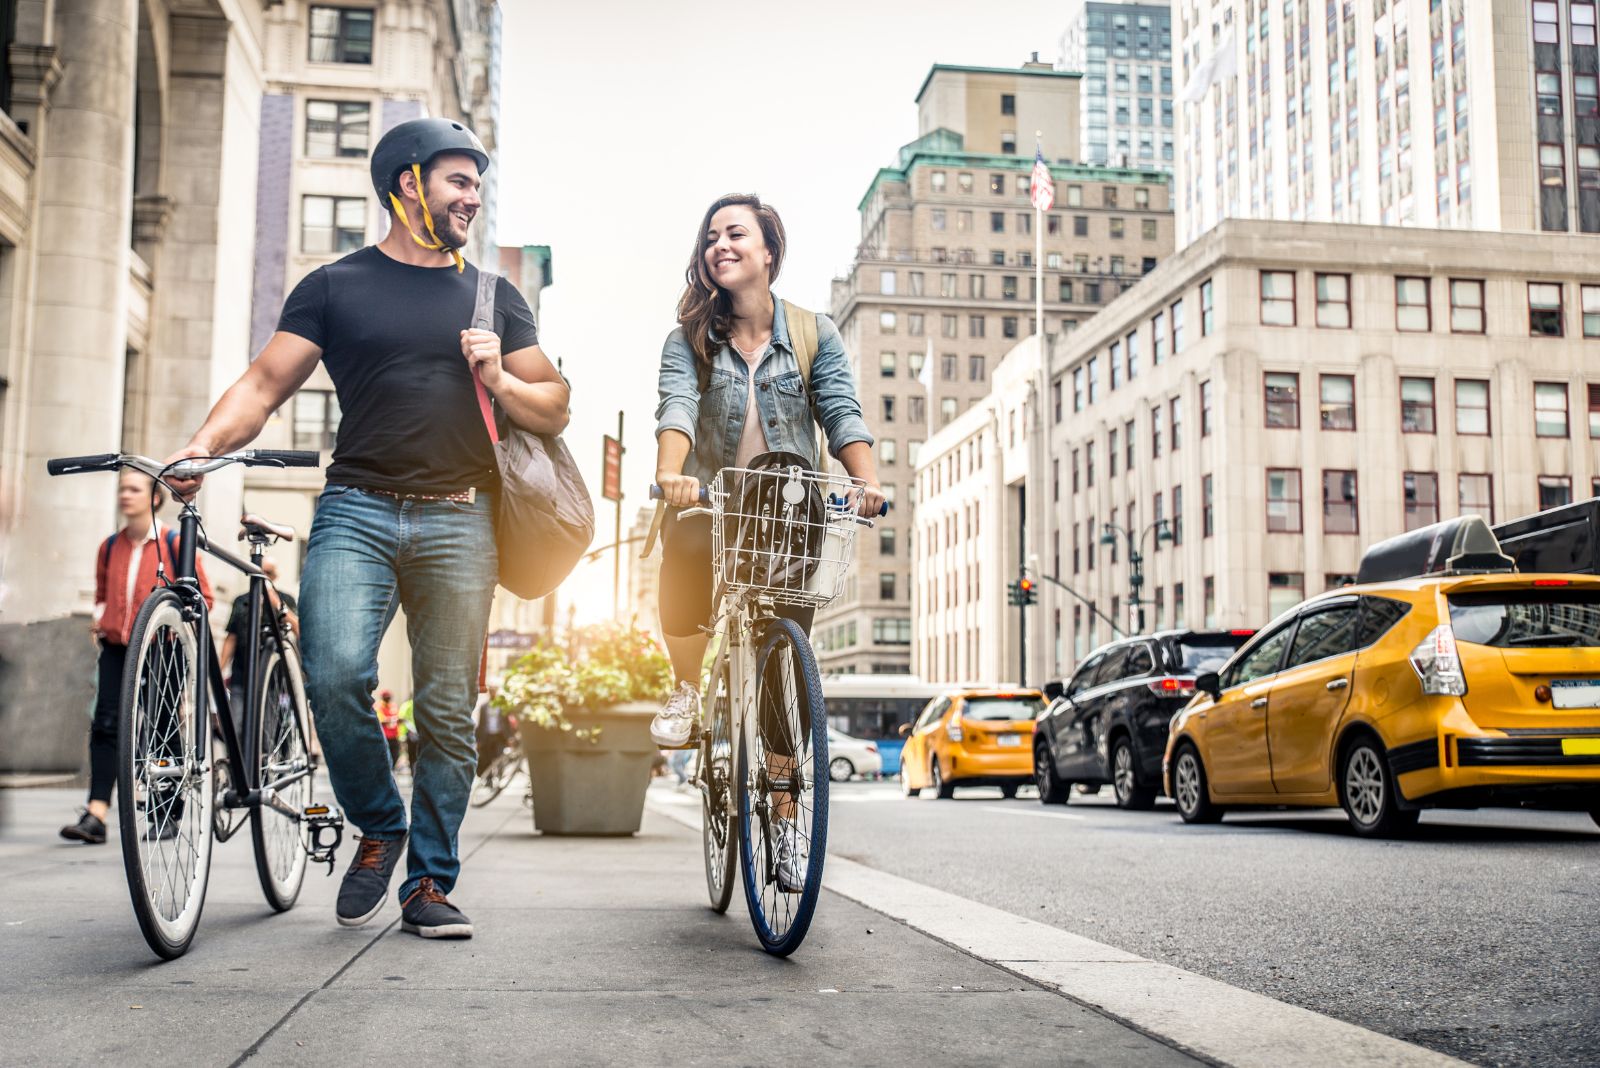 New ride bike. Прогулка на велосипеде в городе. Велосипед в городе. Велосипедист в городе. Люди на велосипедах в городе.